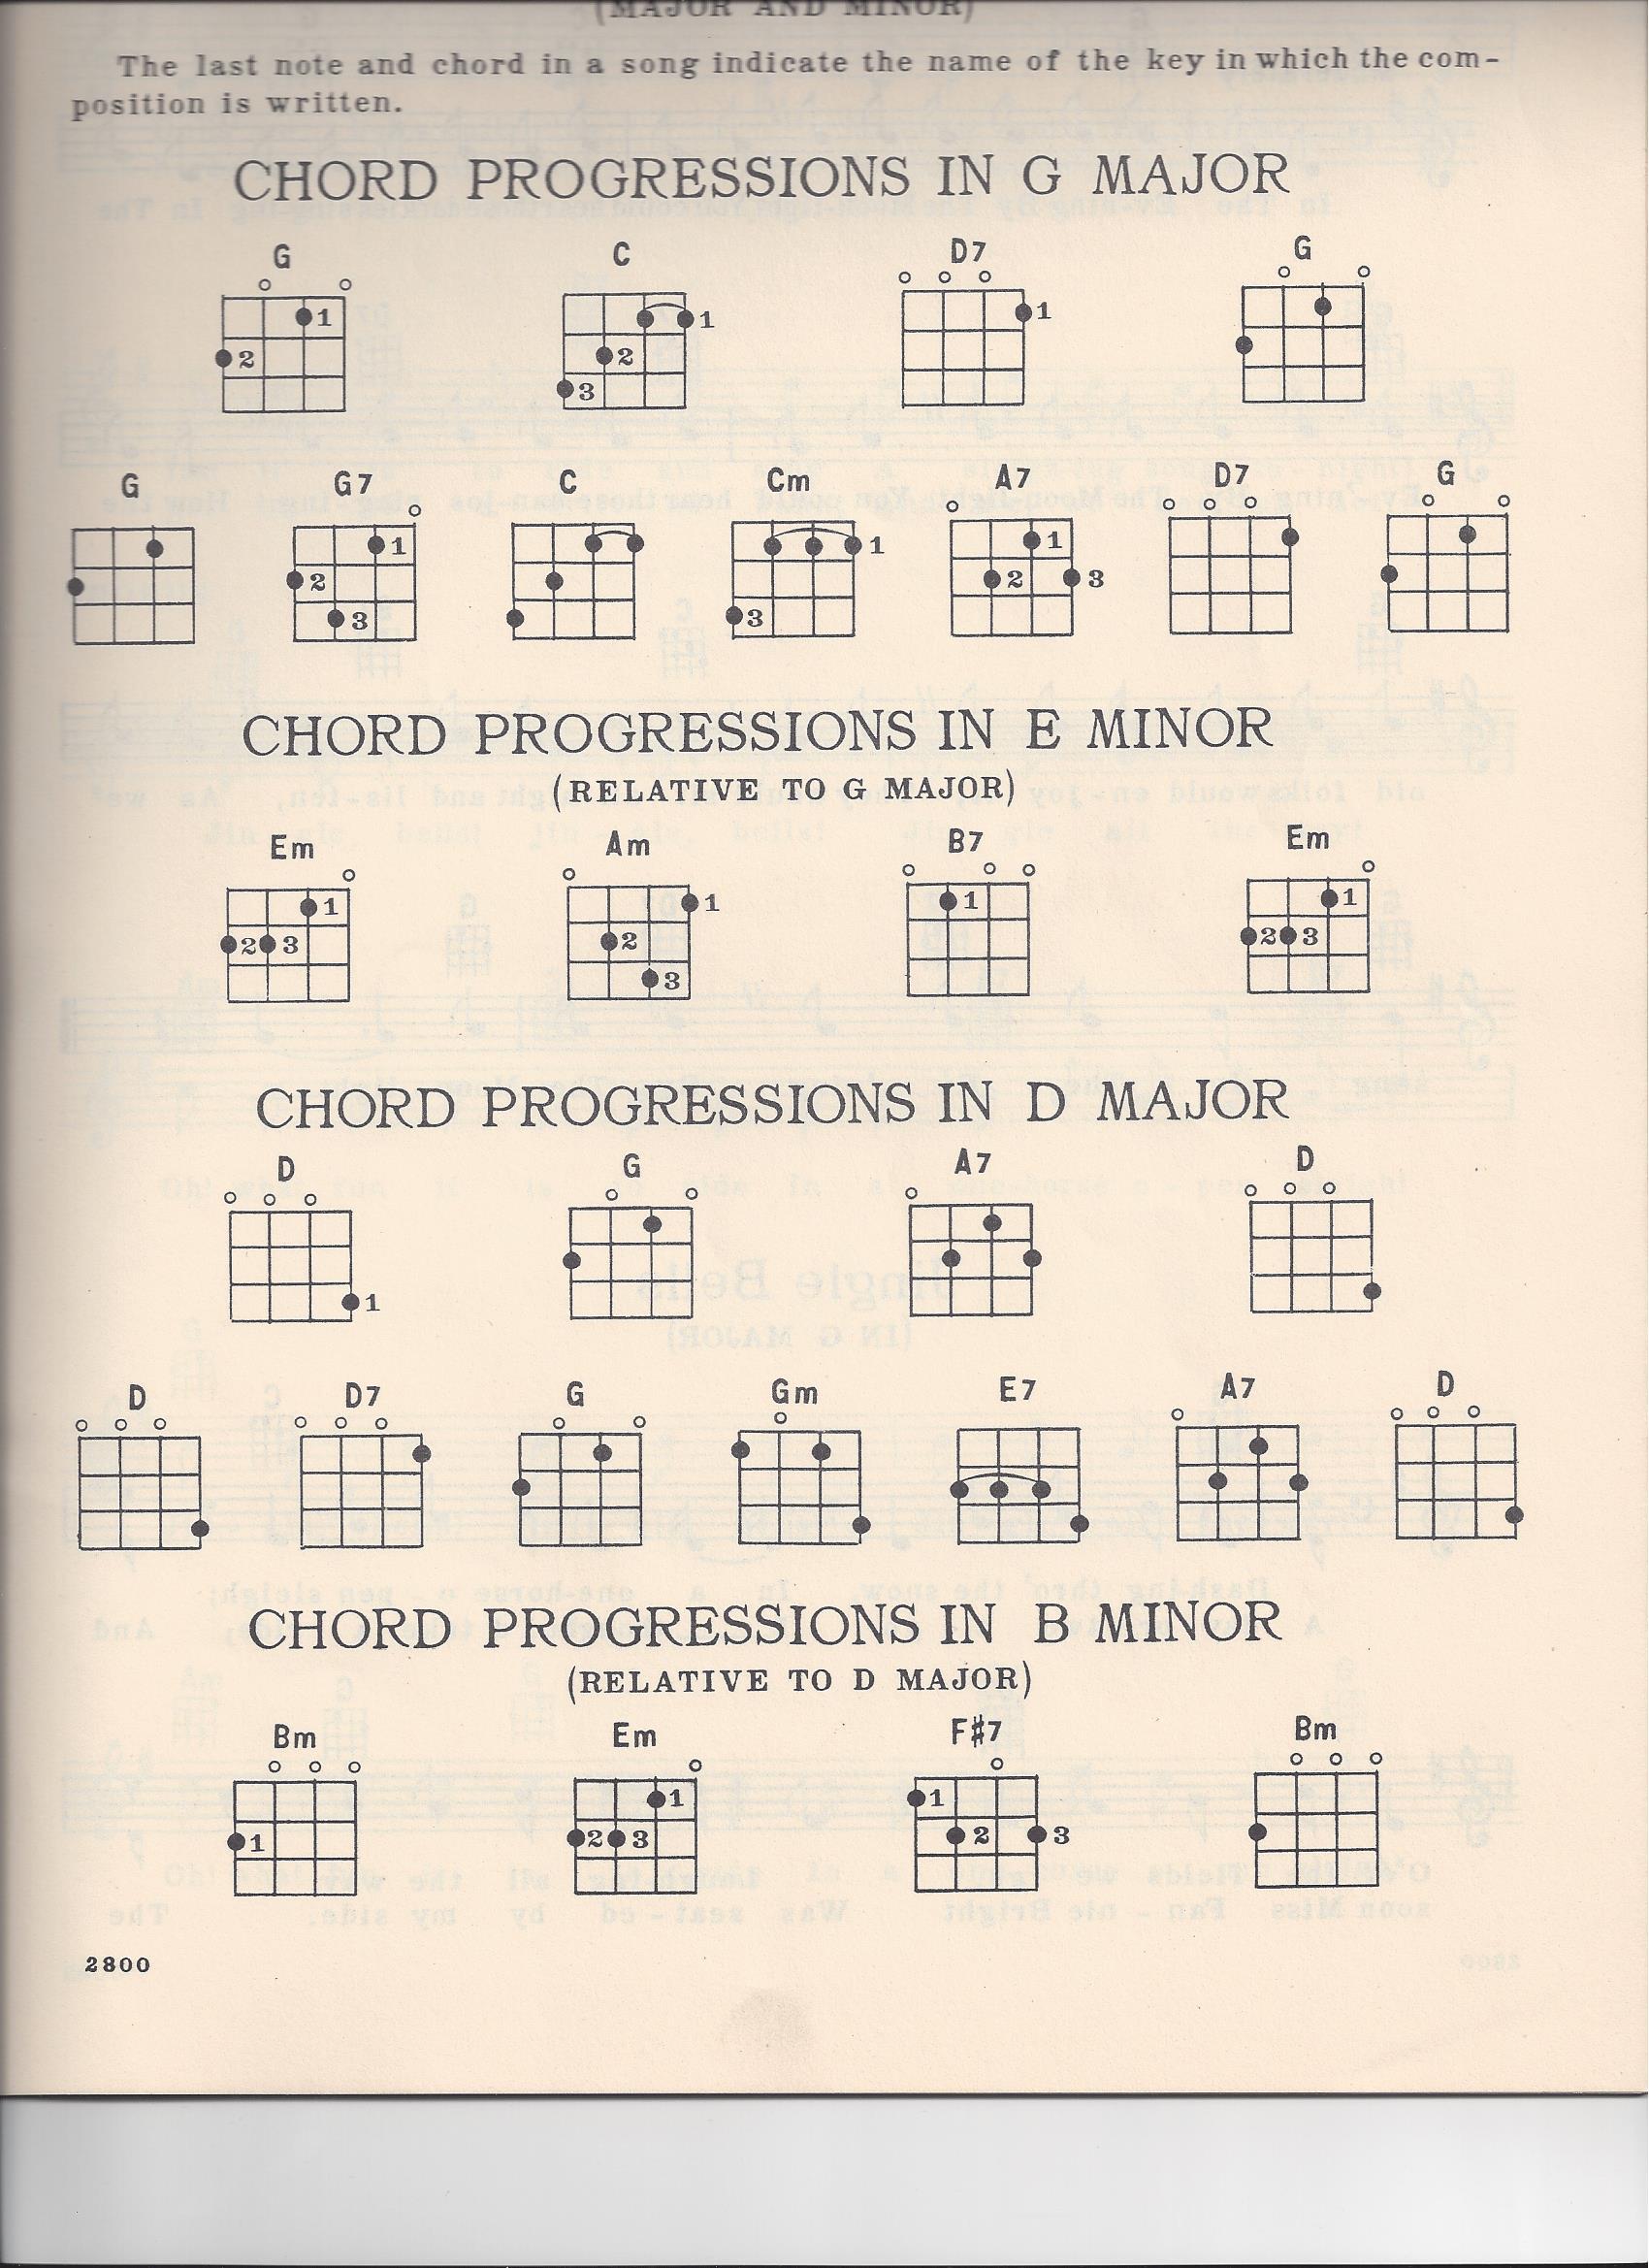 Open D Tuning Chord Chart